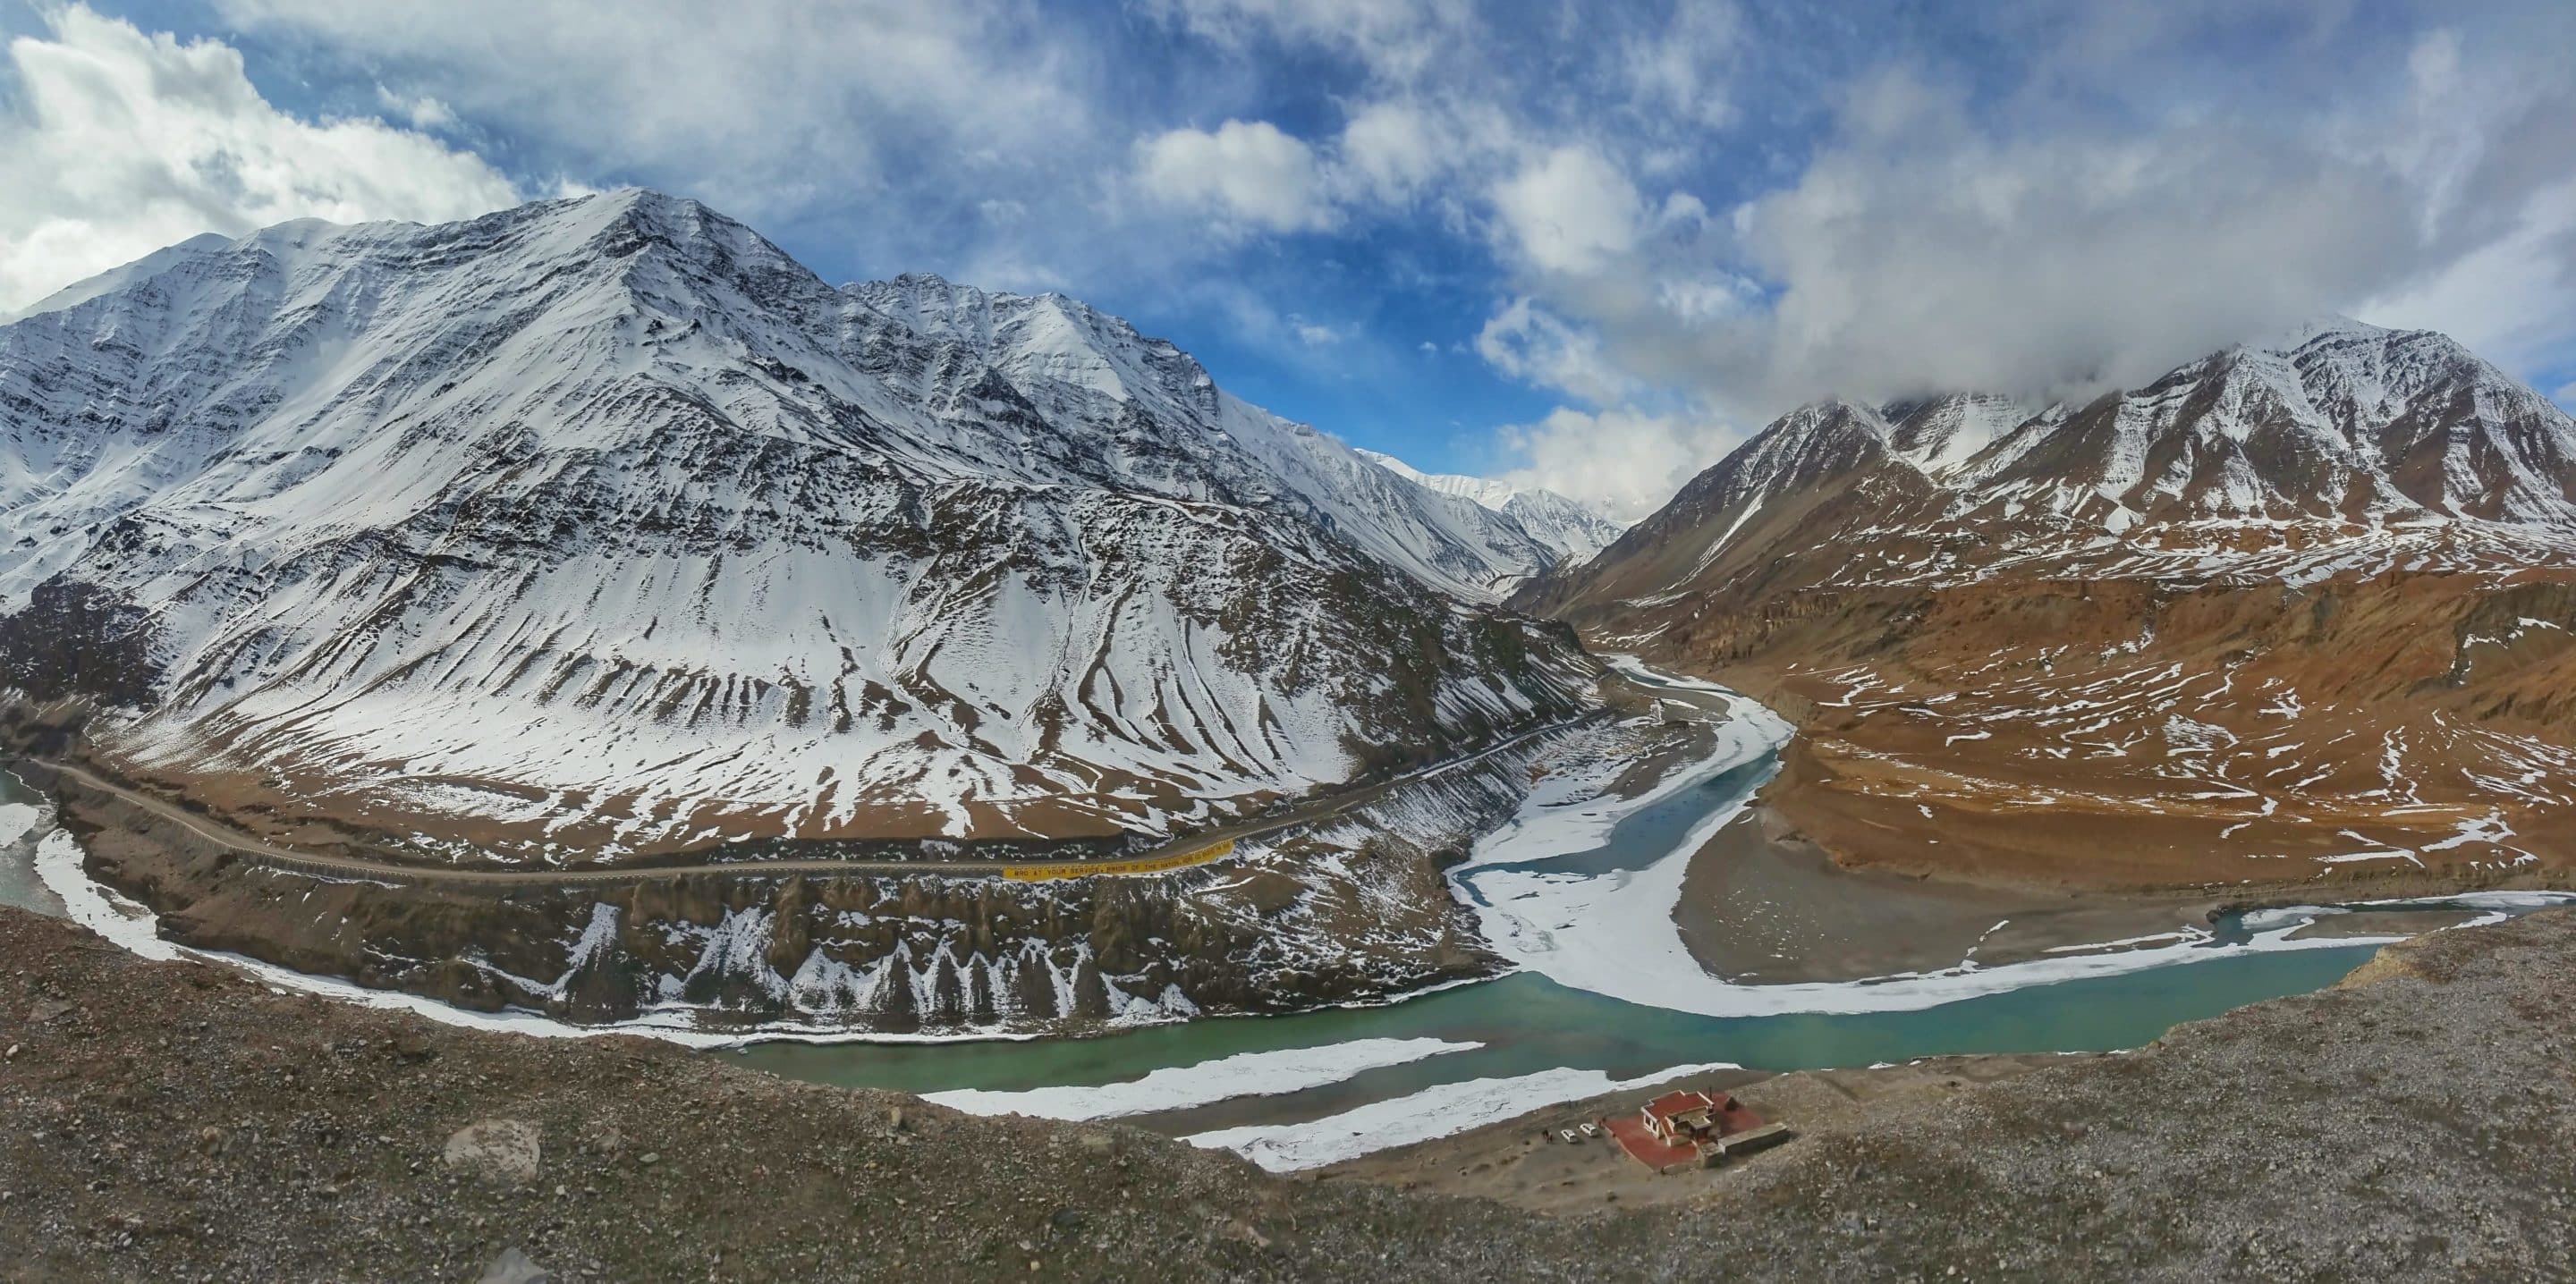 Indus and Zanskar River on the Snow Leopard Safari Itinerary